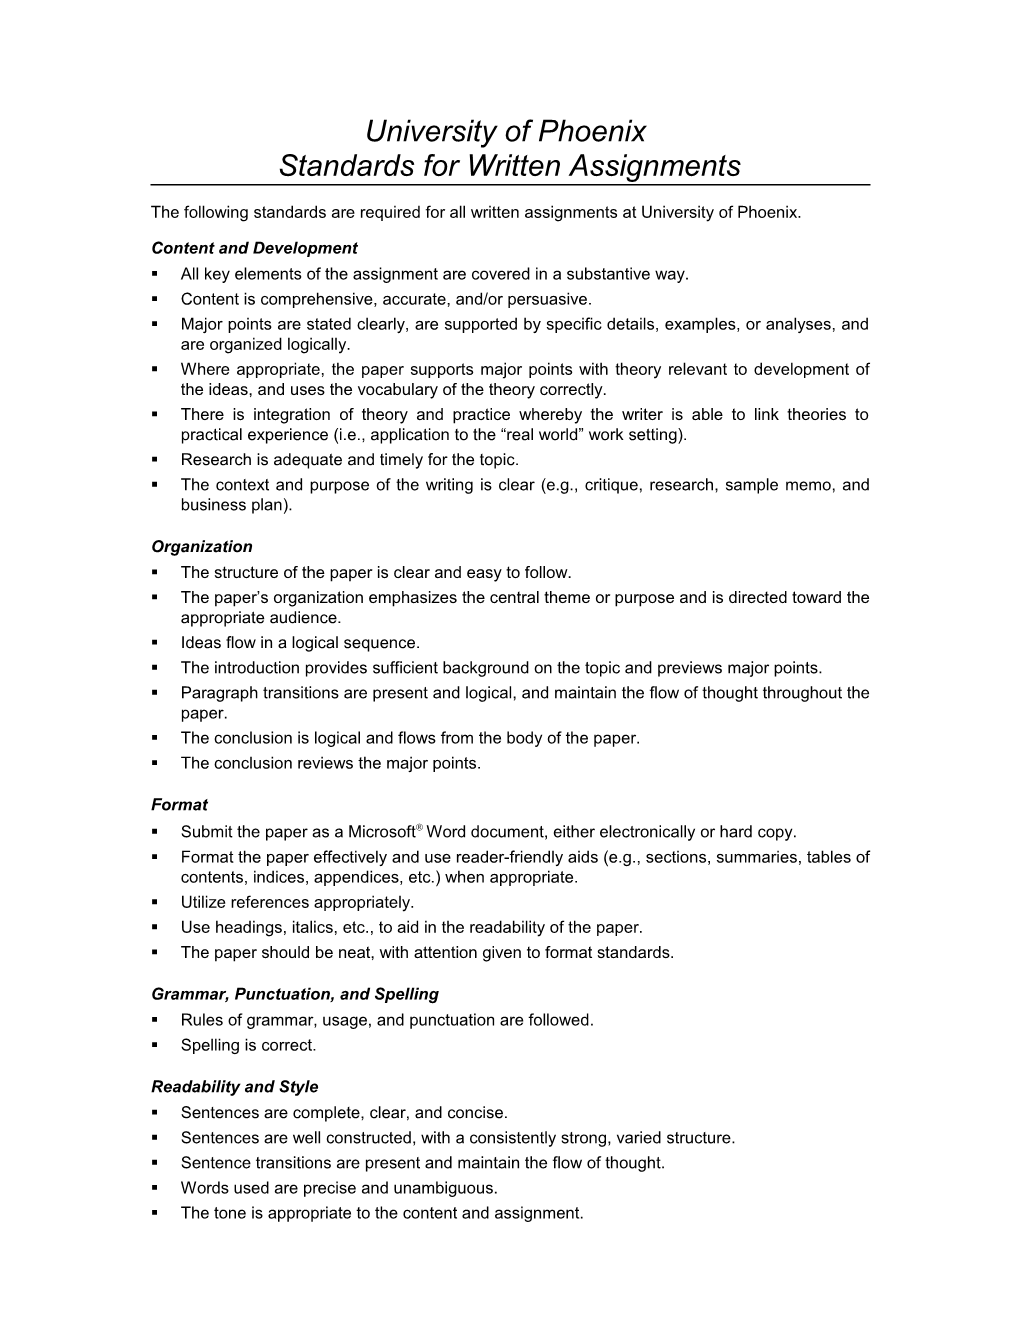 University of Phoenix Formatting Standards for Written Assignments